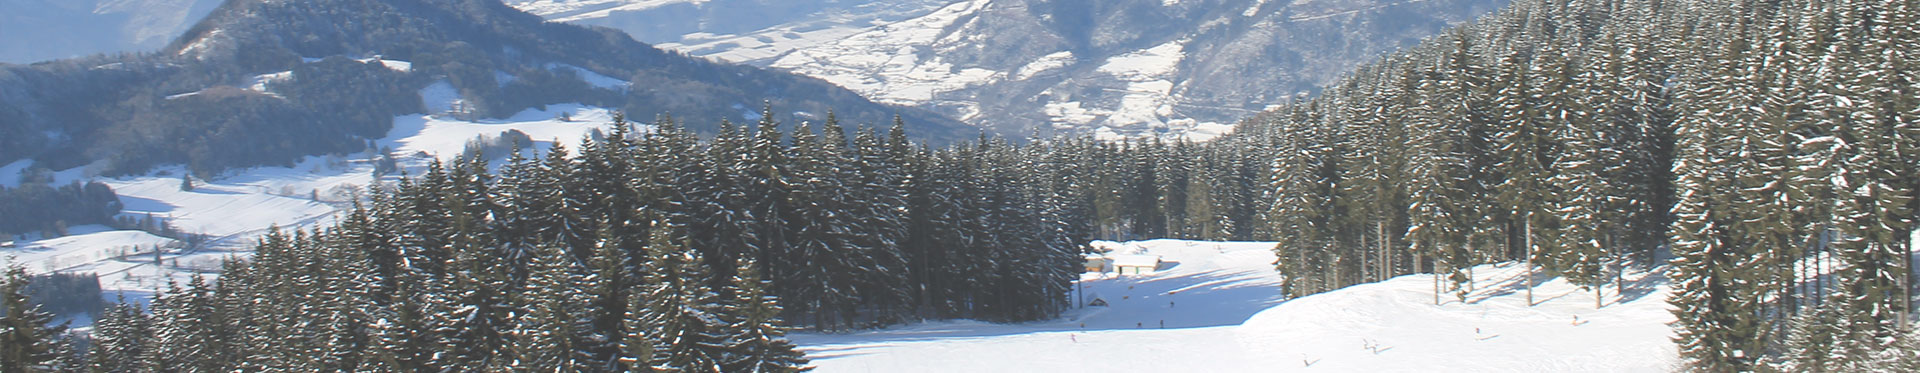 Ski alpin grand plan